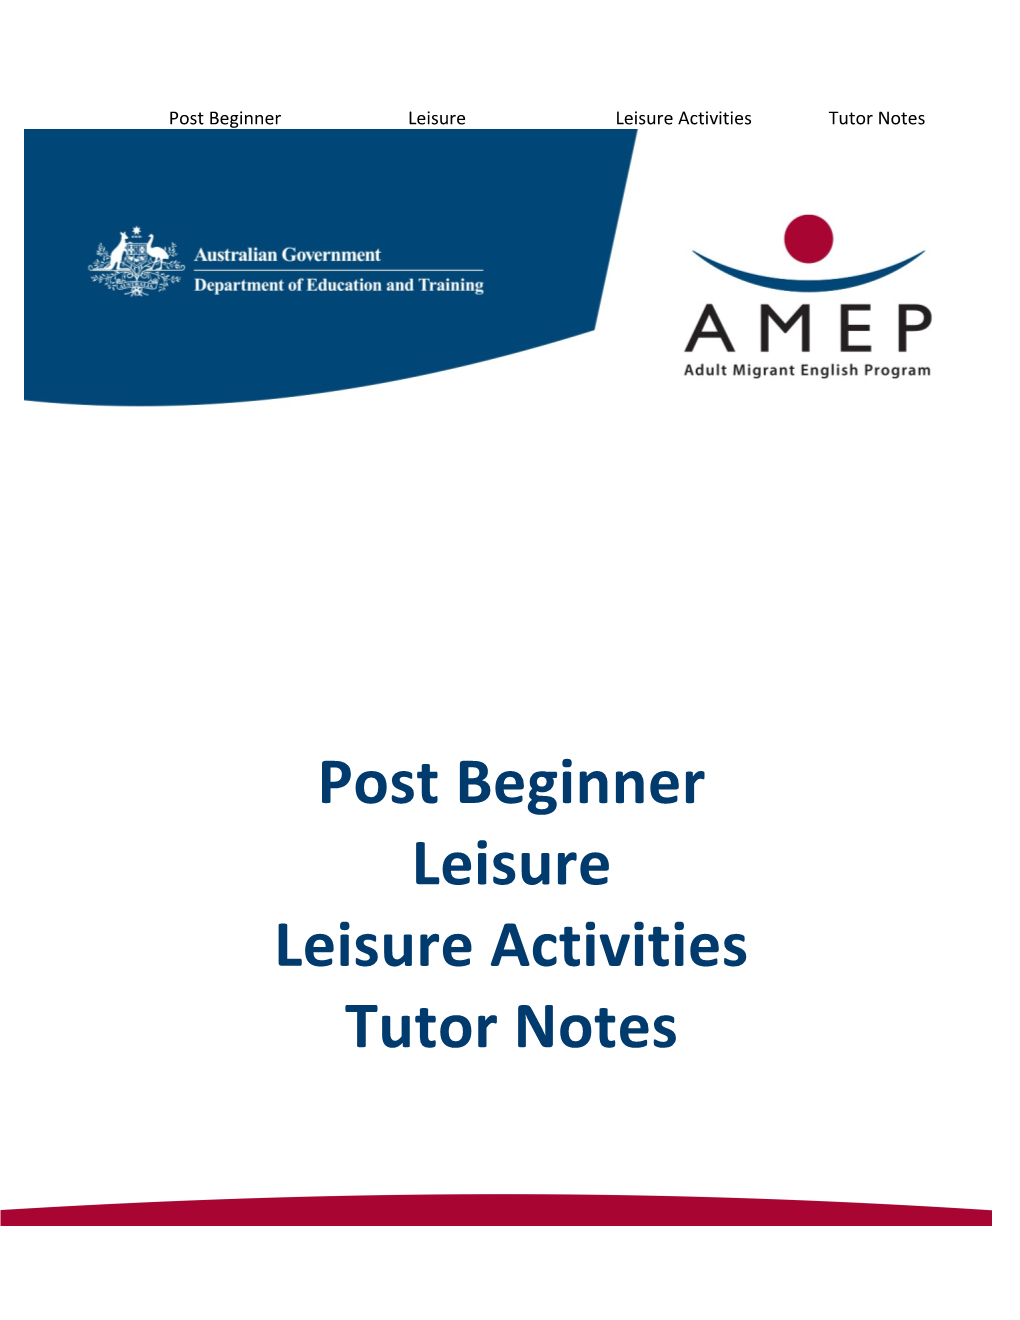 Post Beginner Leisure Leisure Activities Tutor Notes